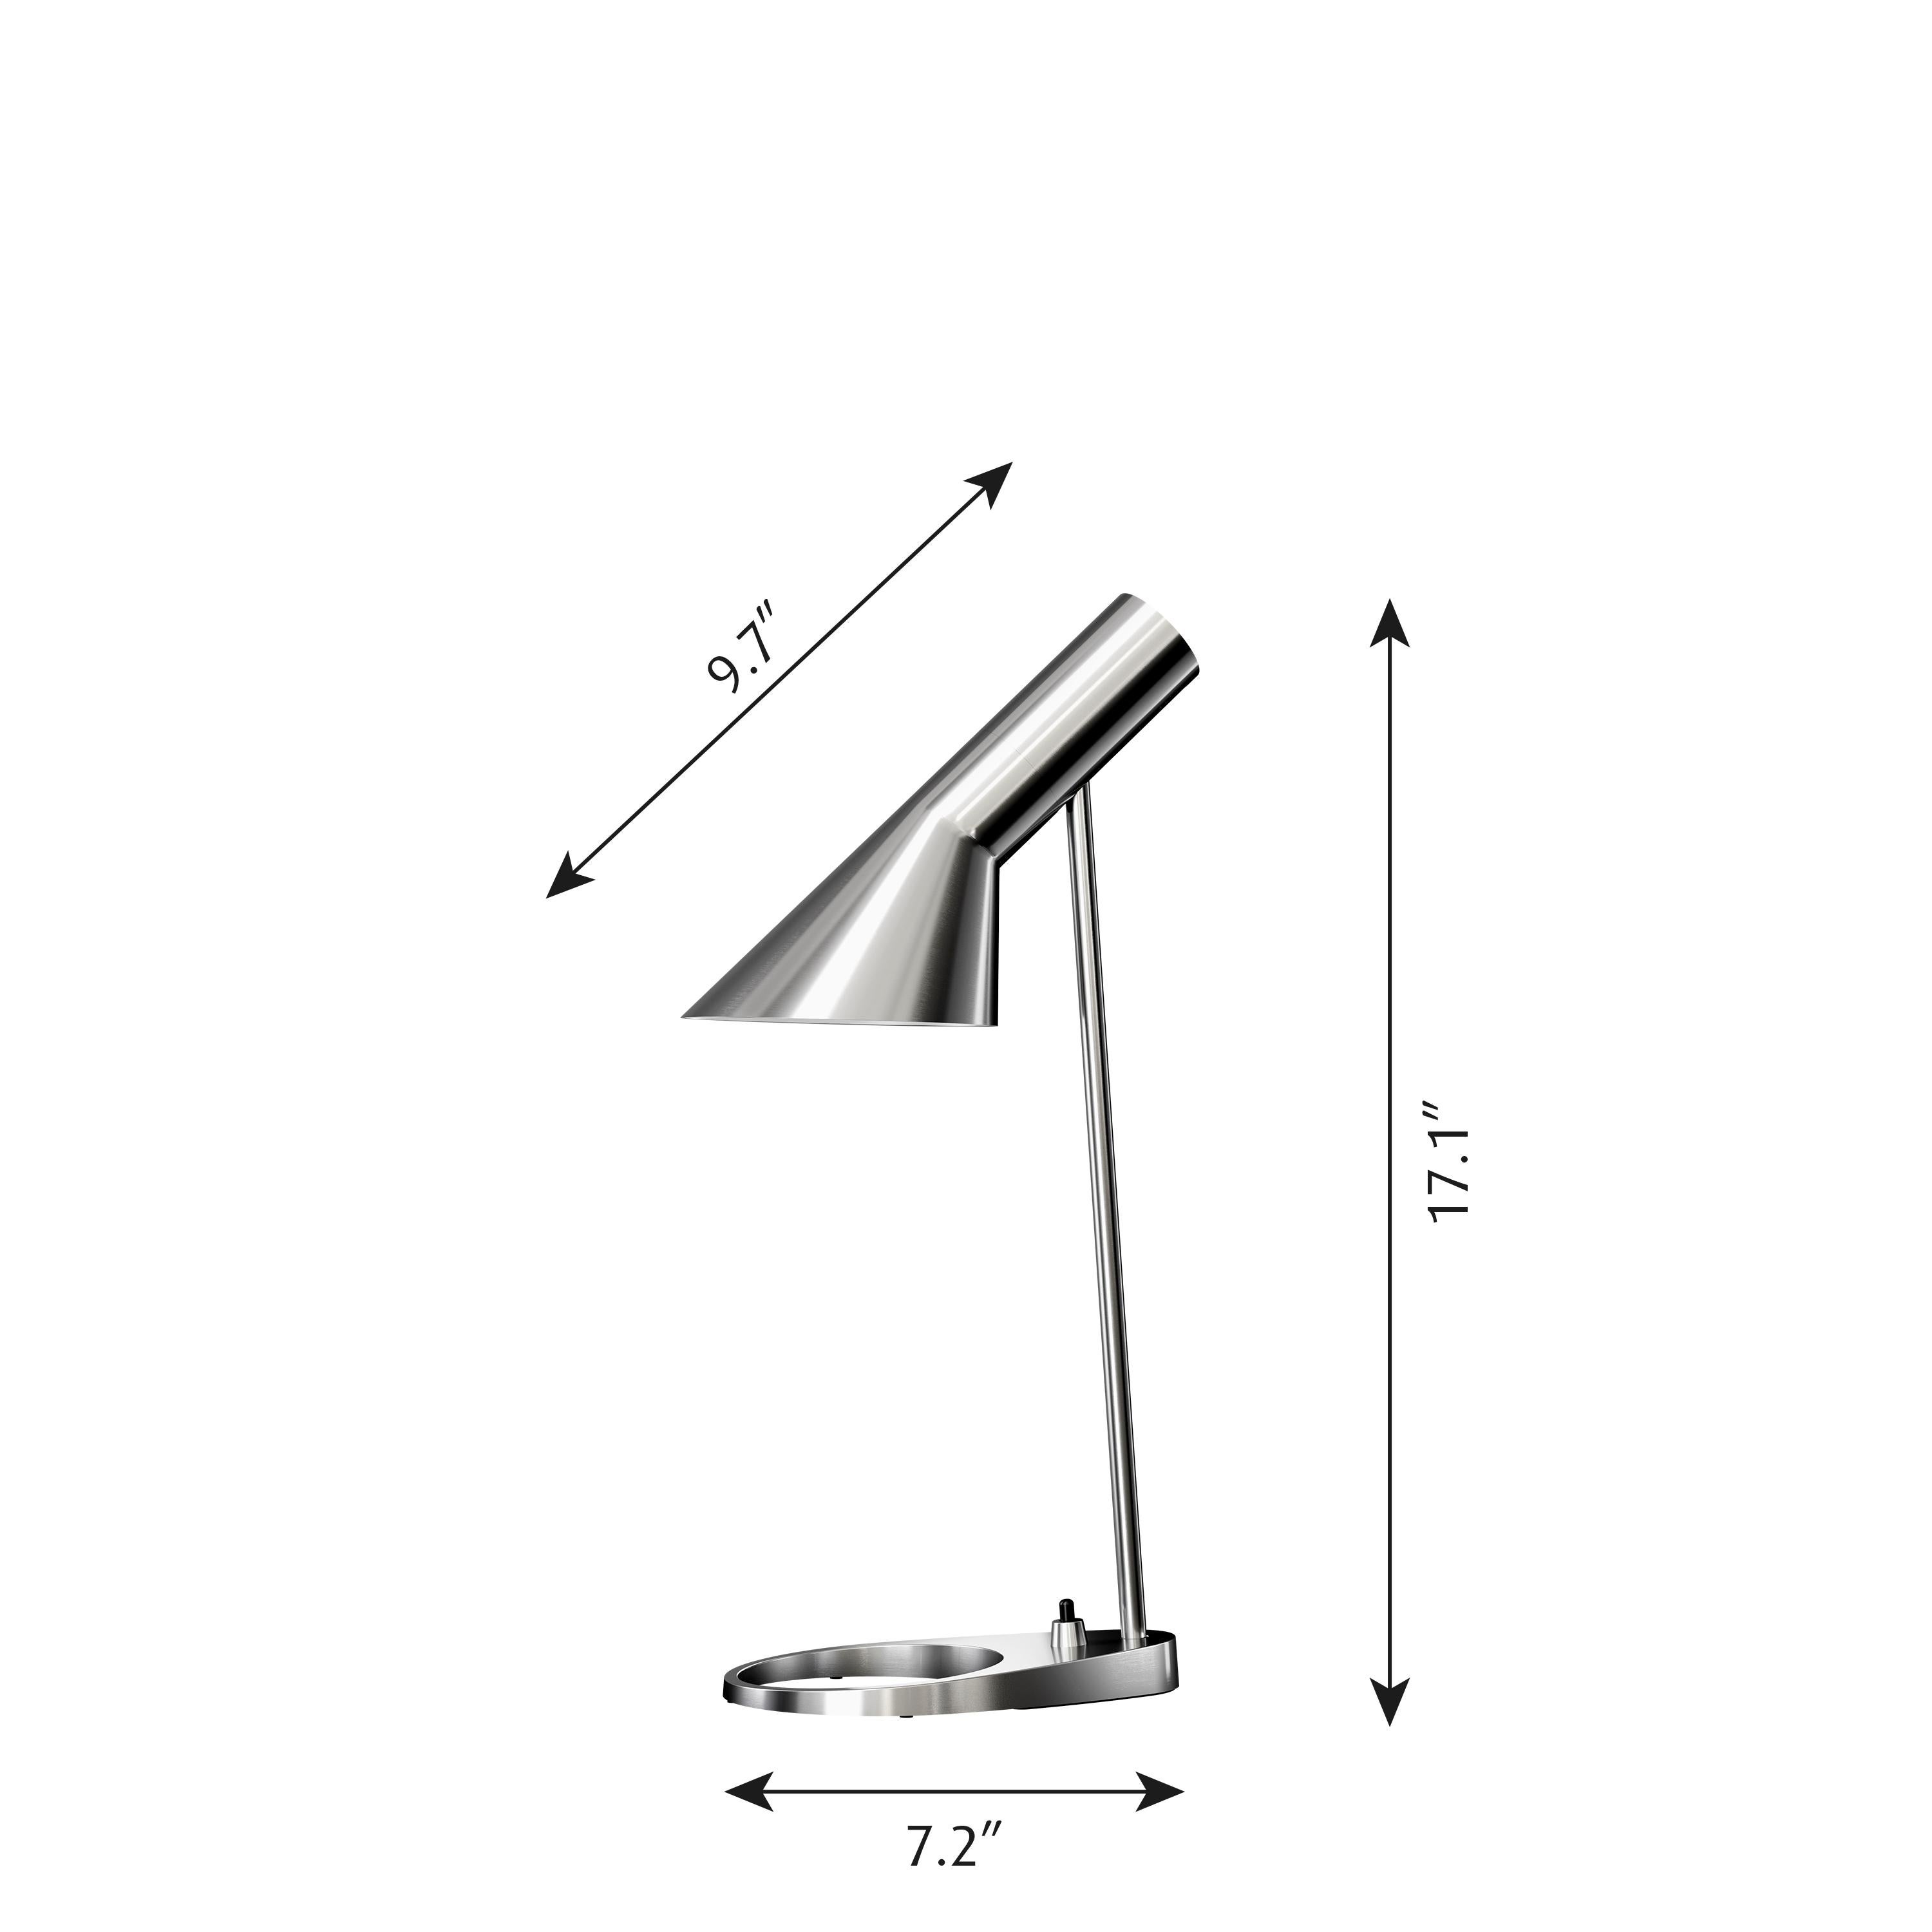 Scandinavian Modern Arne Jacobsen 'AJ Mini' Table Lamp in Stainless Steel for Louis Poulsen For Sale